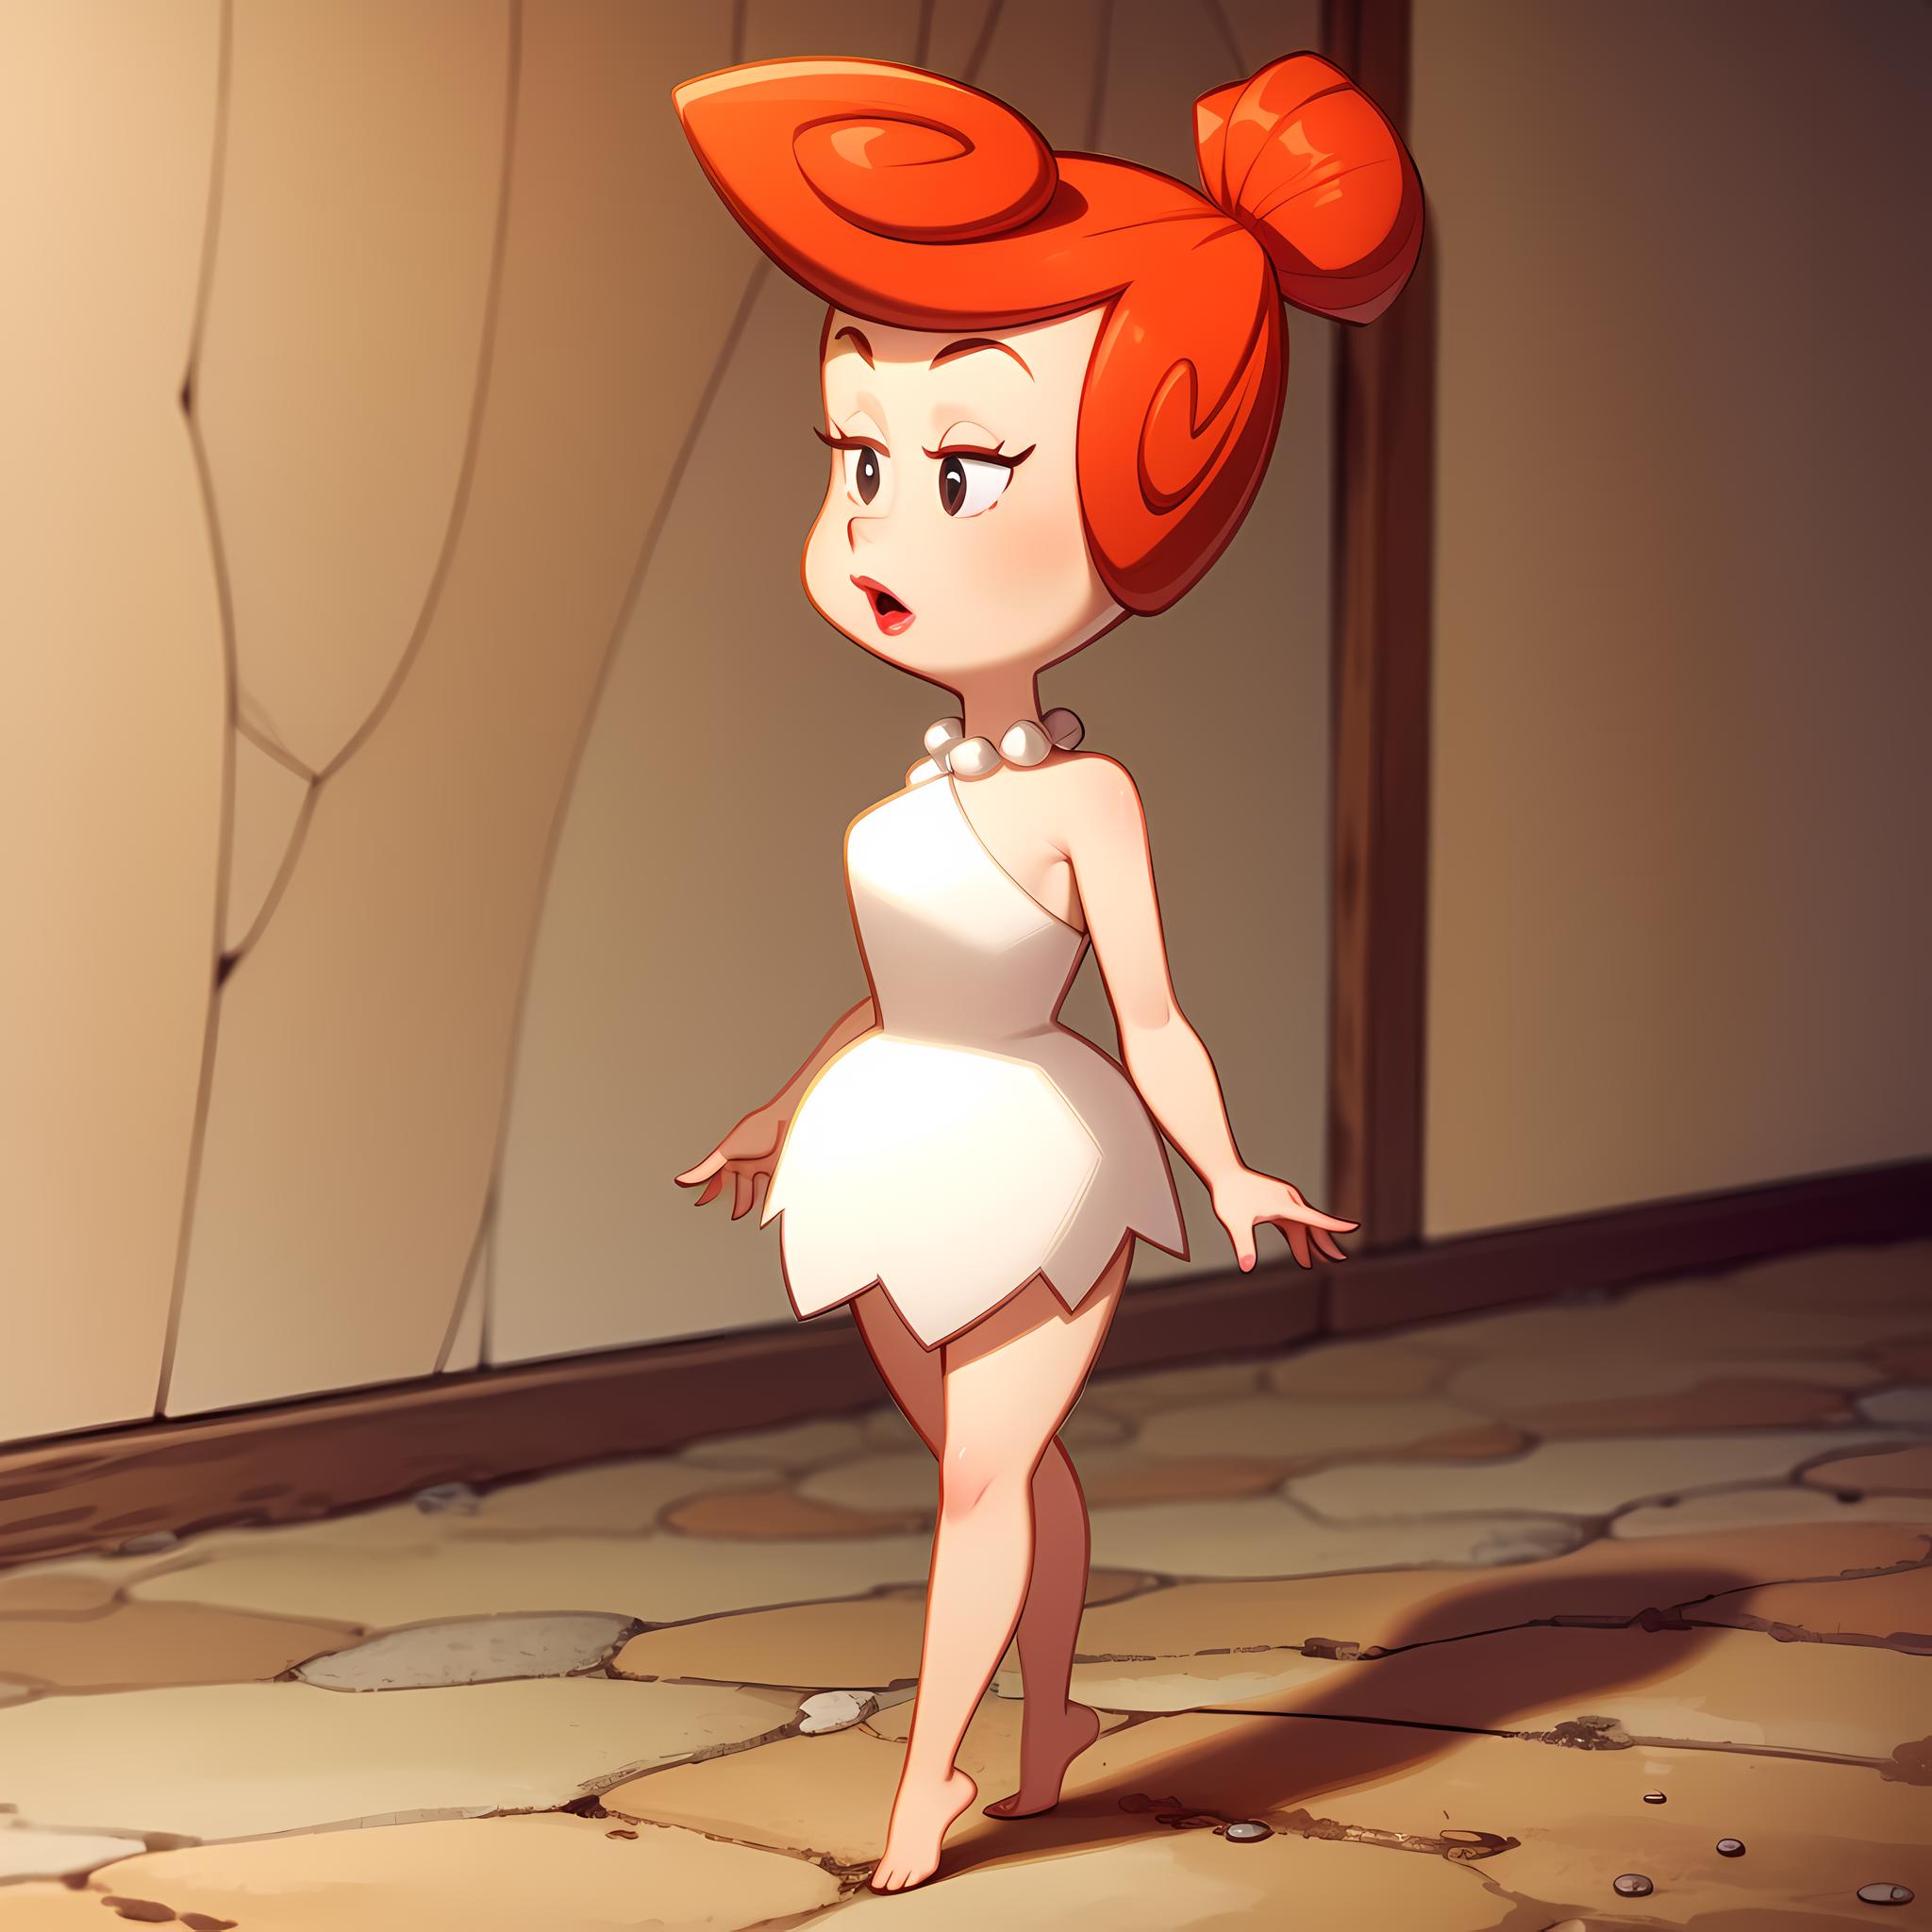 Wilma Flintstone [ The Flintstones] image by TheGooder